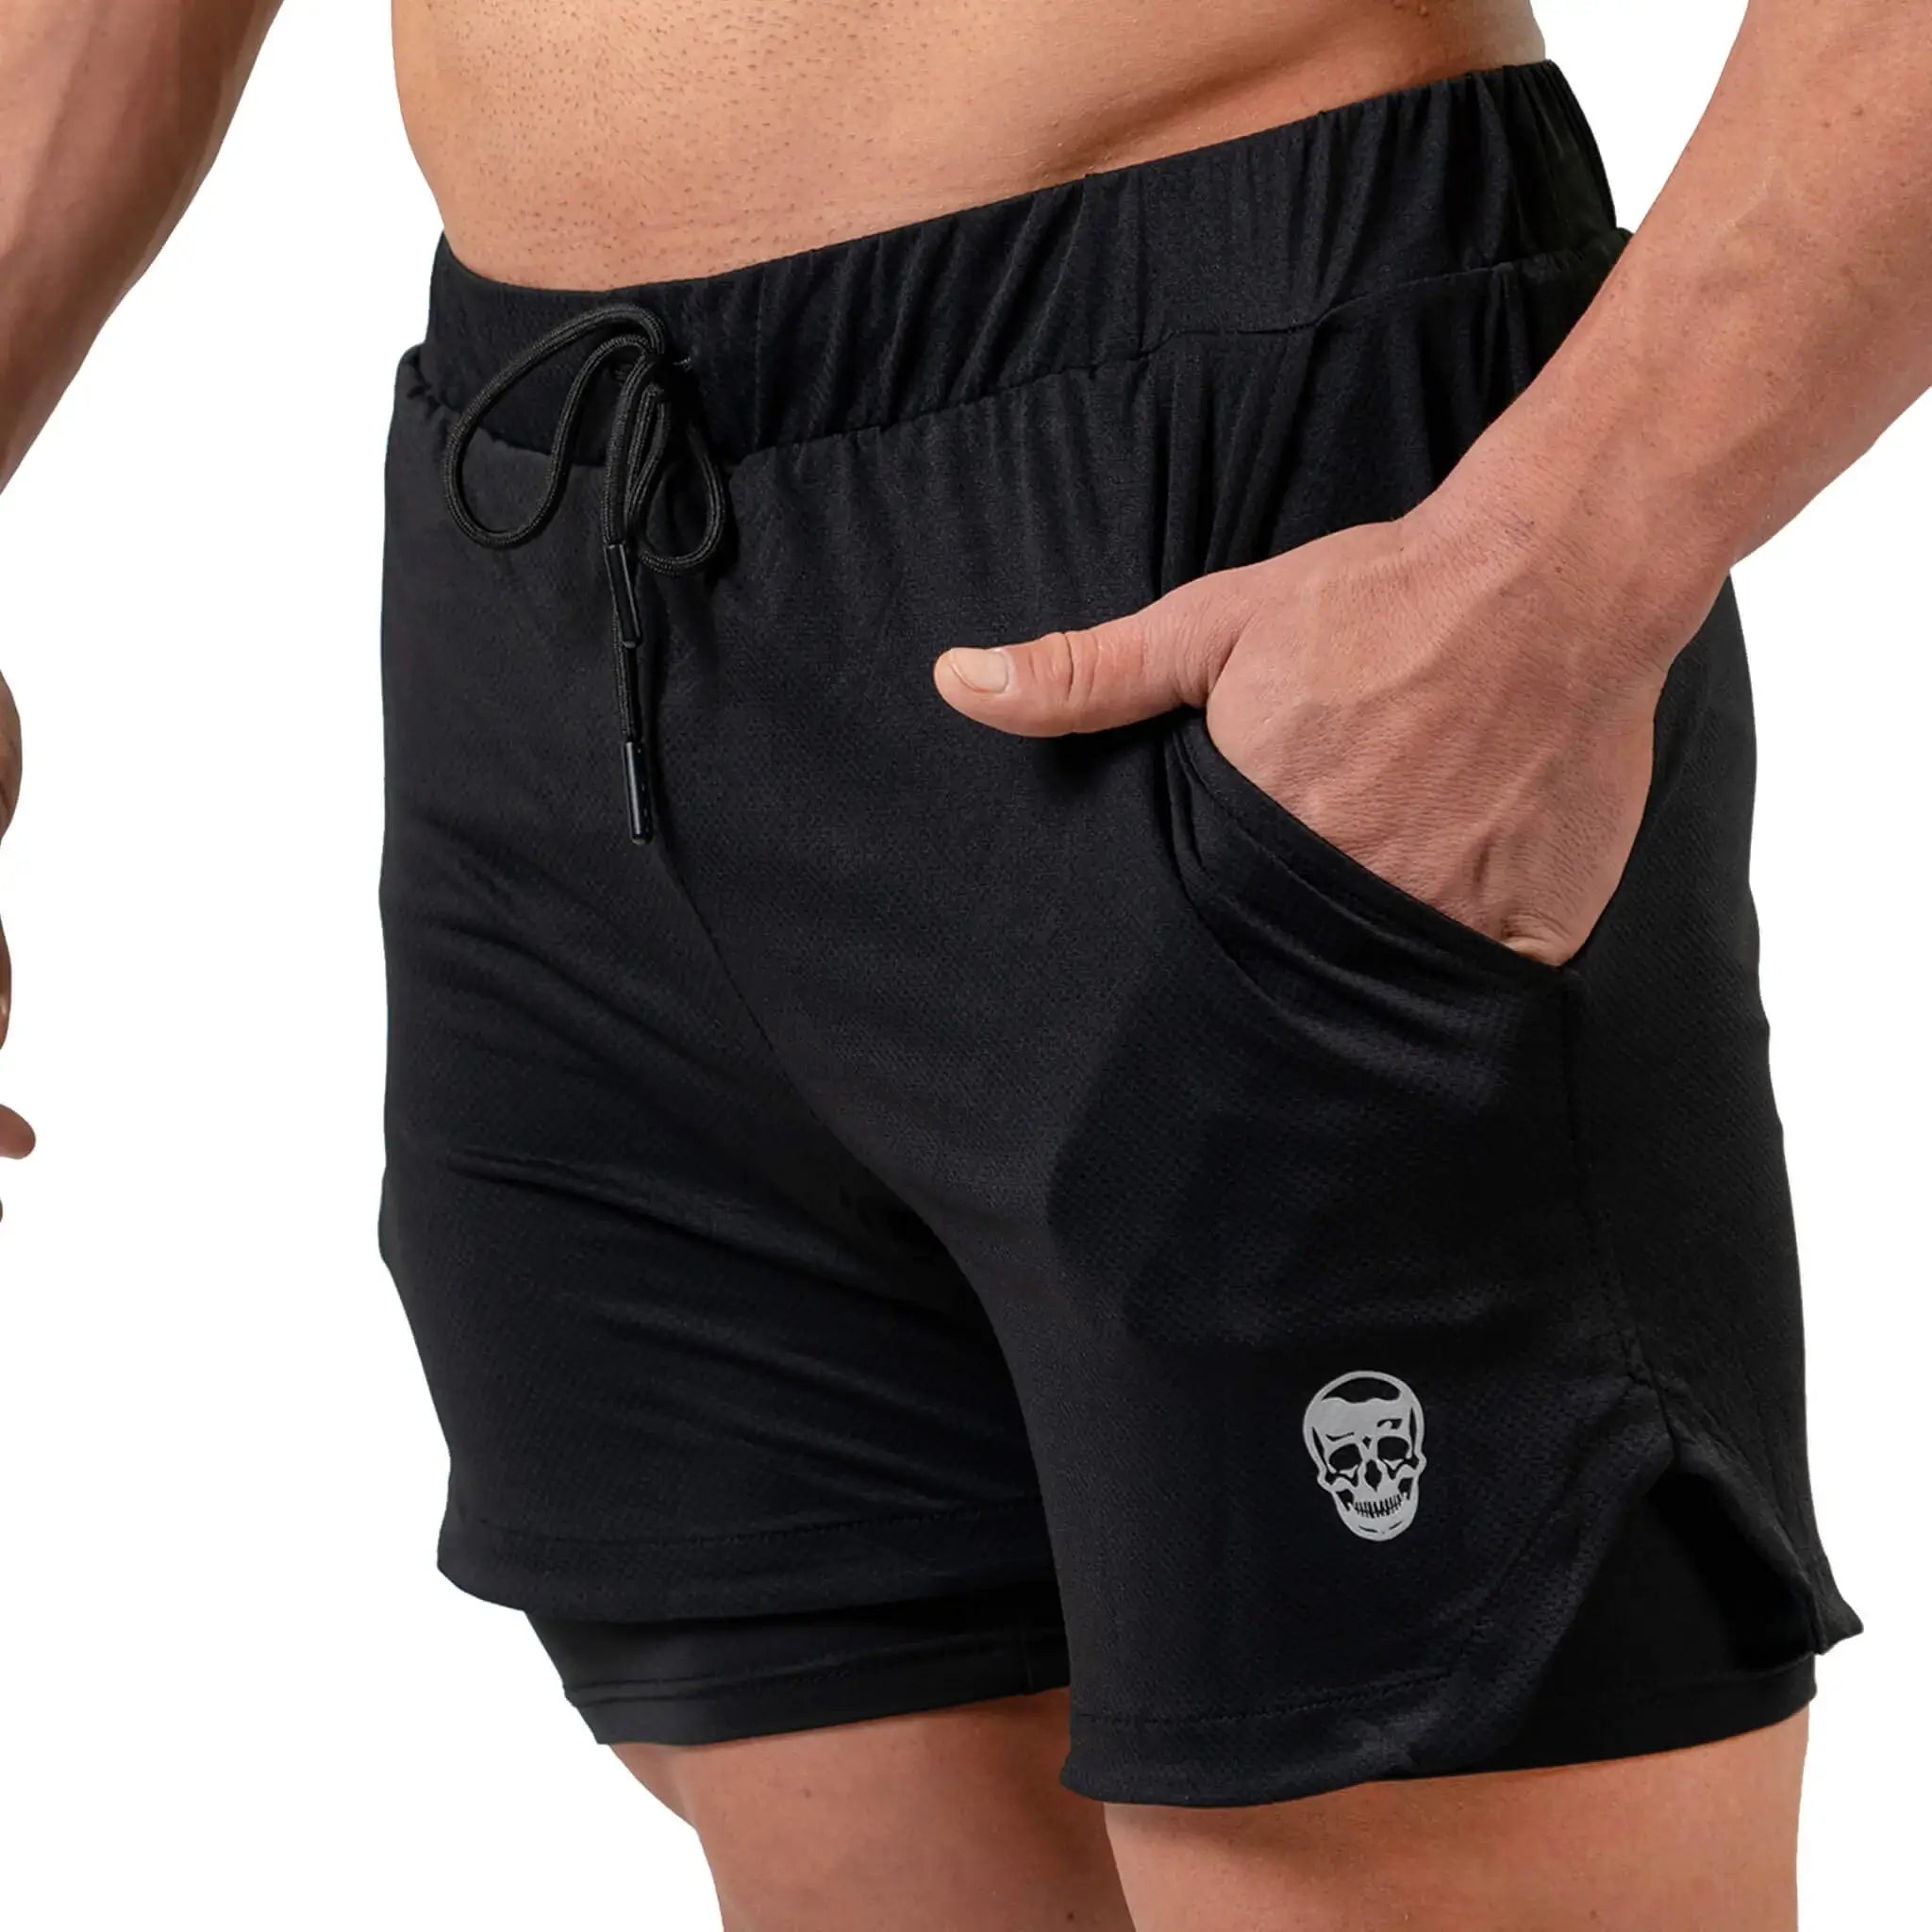 react shorts pocket detail